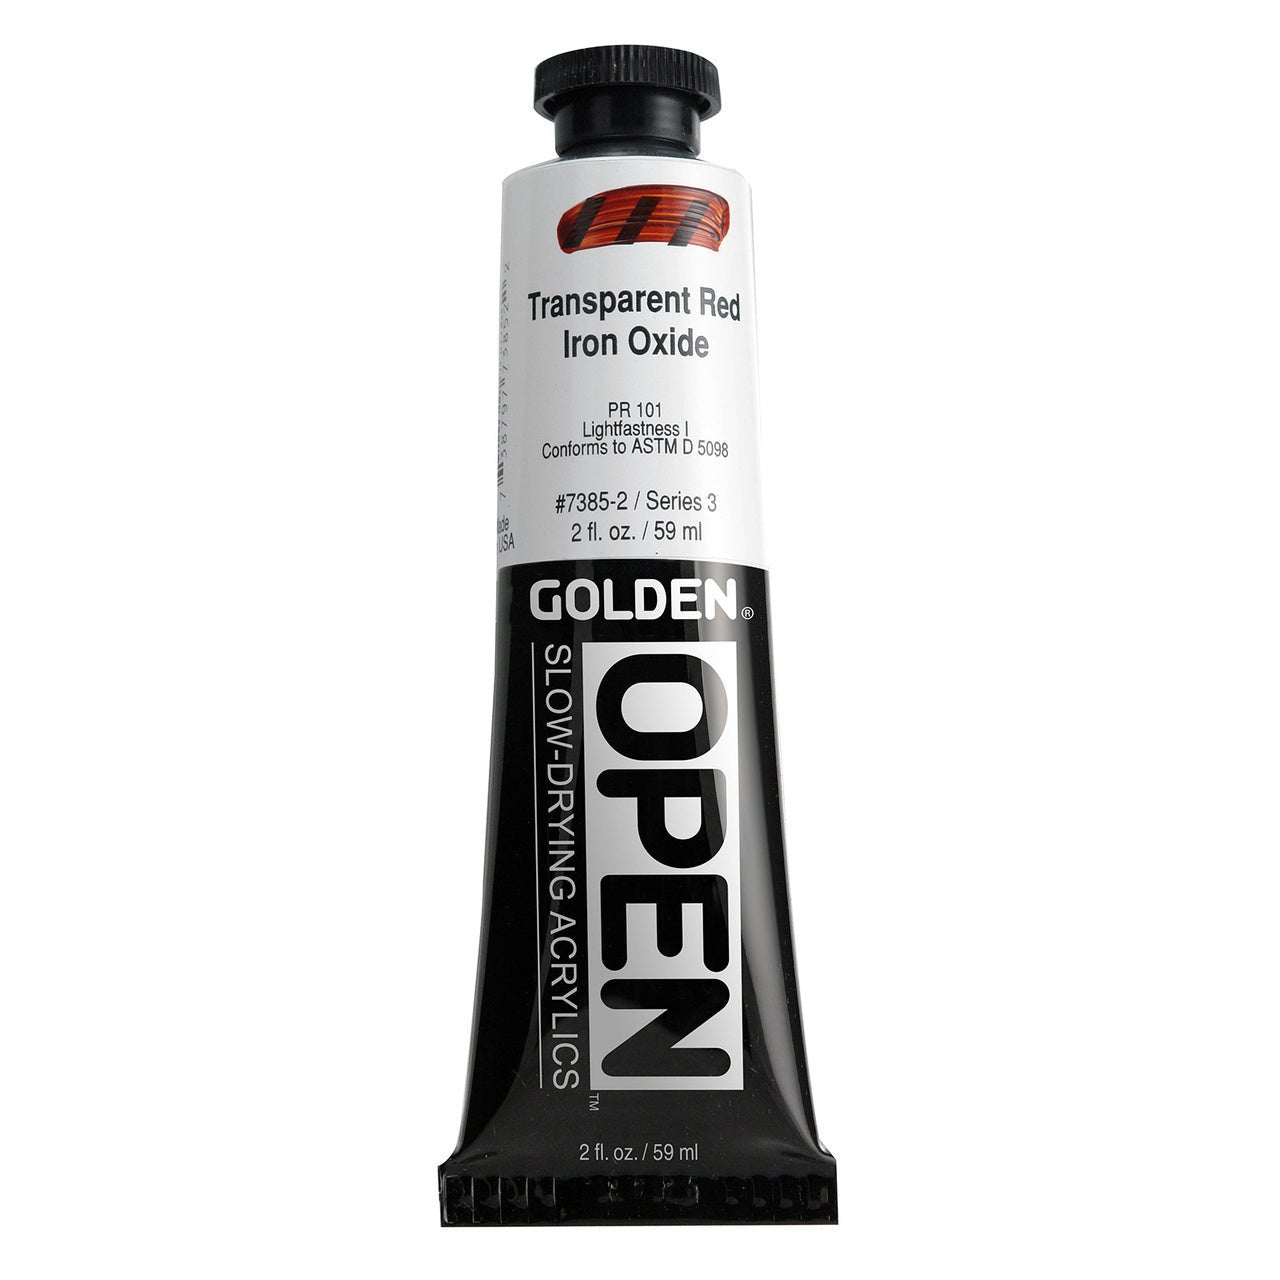 Golden OPEN Acrylic Transparent Red Iron Oxide 2 oz - merriartist.com